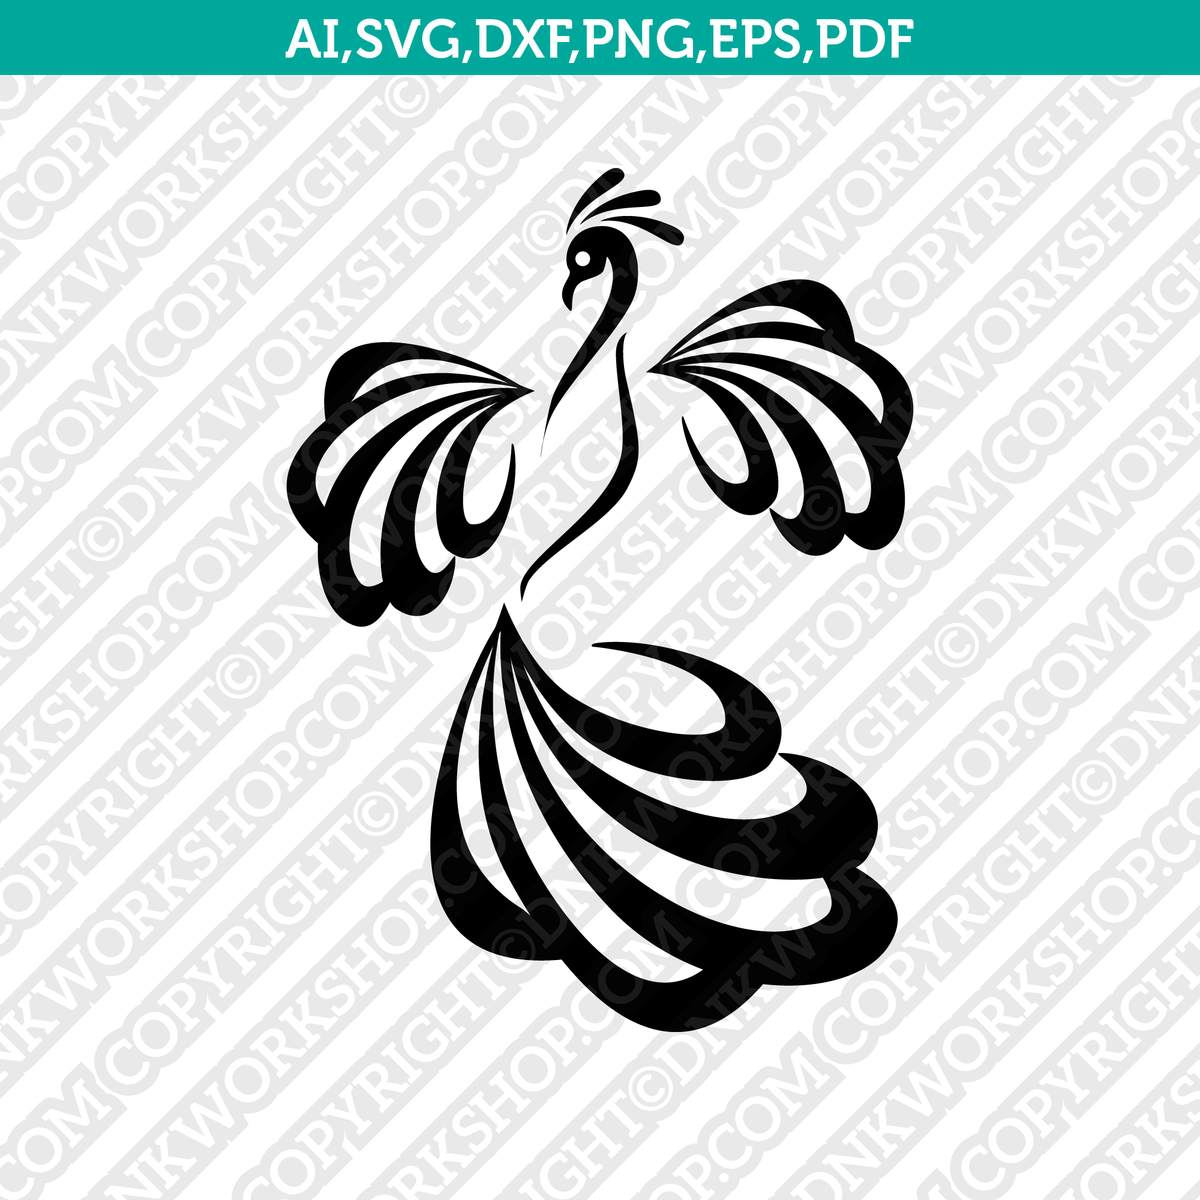 peacock silhouette clip art